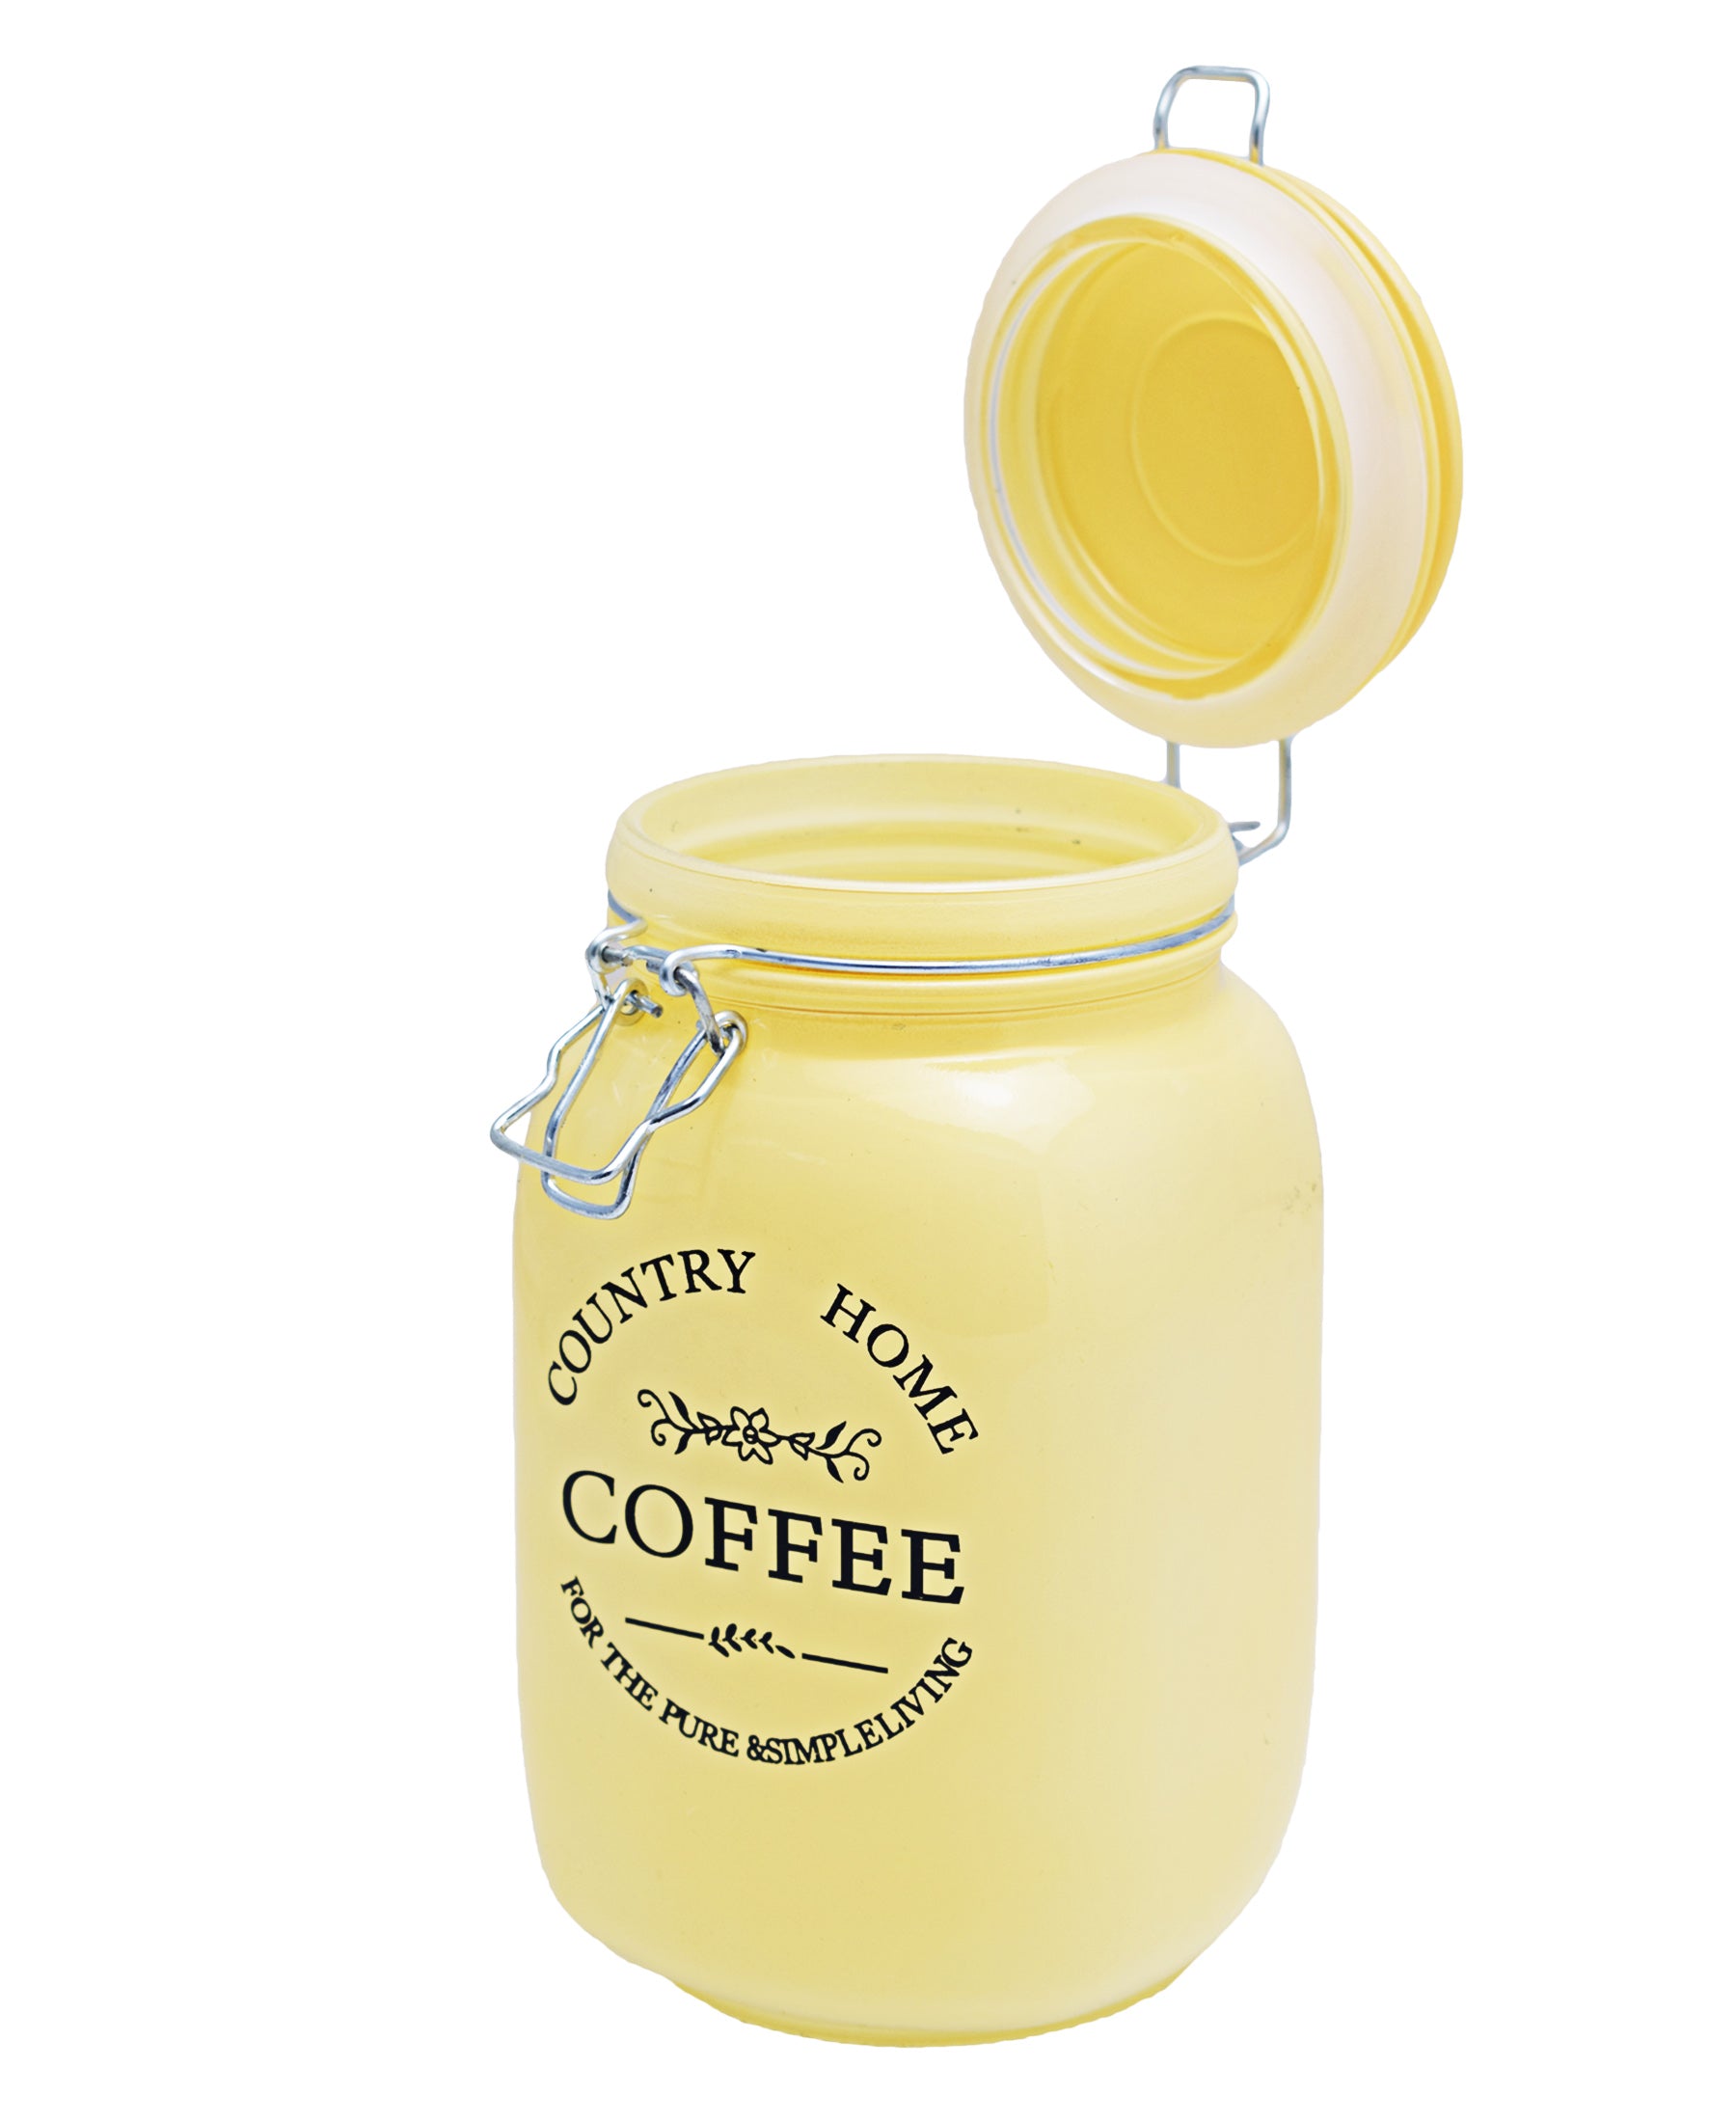 Country Home Coffee Medium Jar - Cream